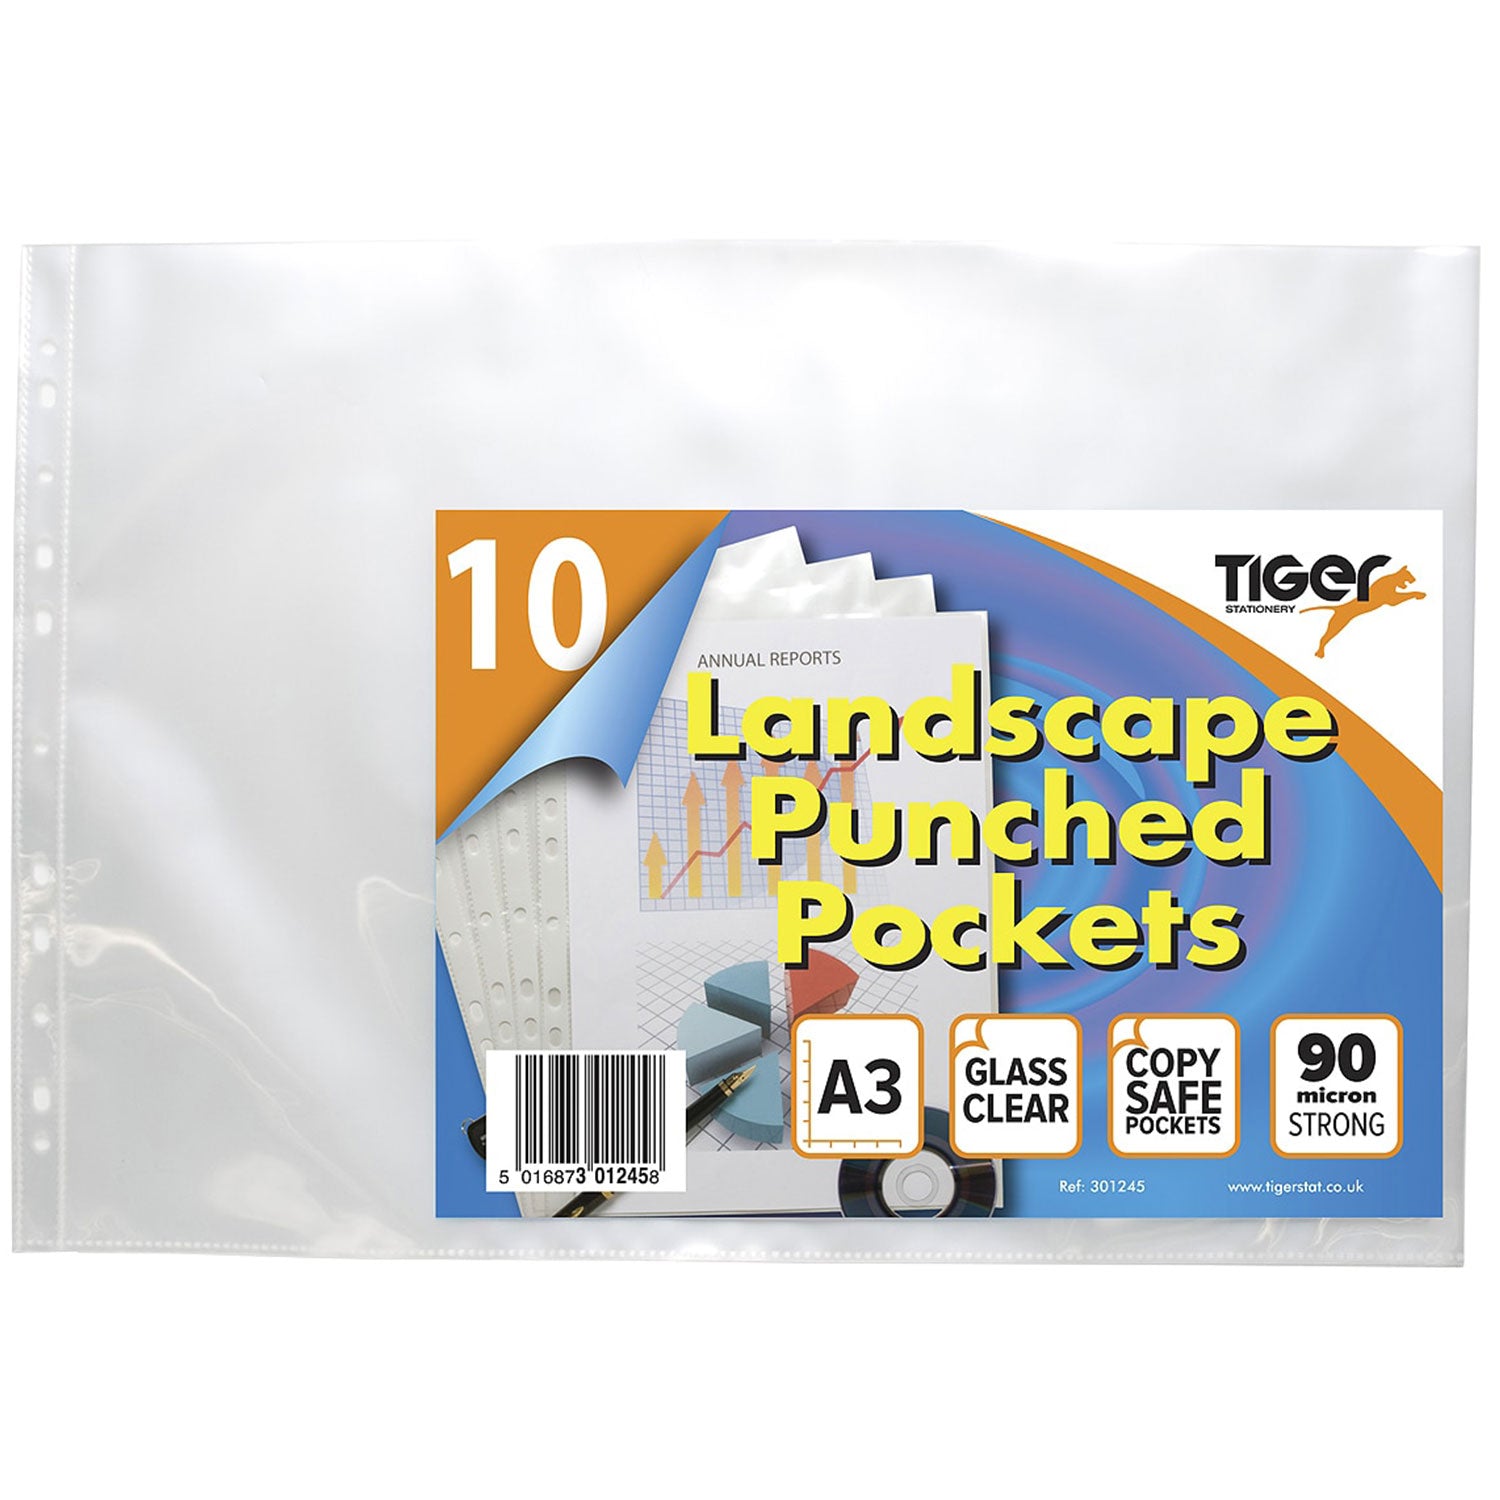 Tiger A3 Landscape Punched Pockets - Pack of 10